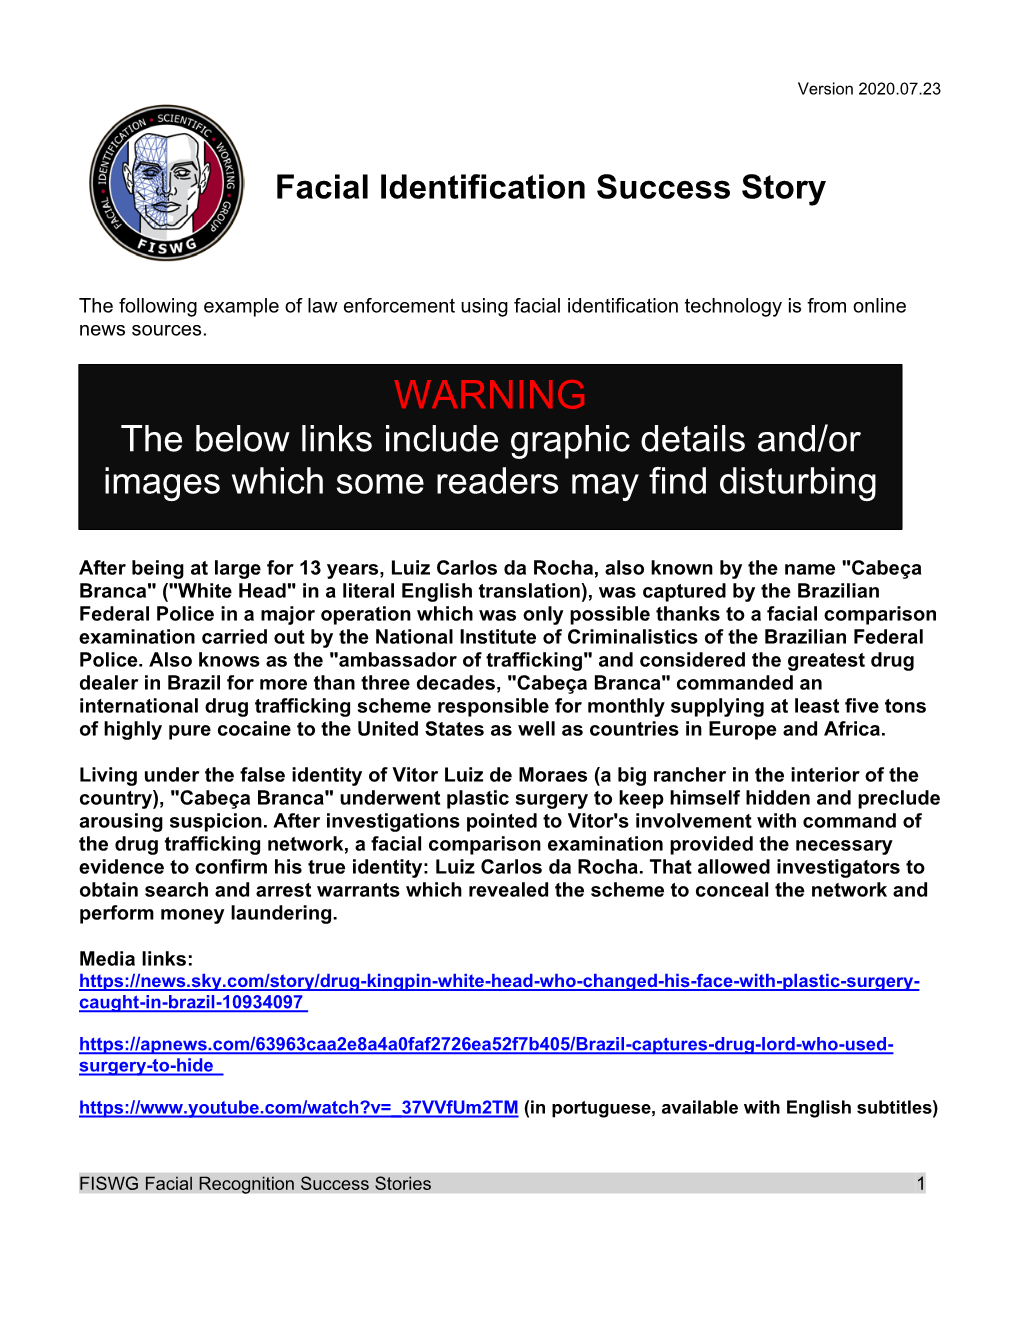 Facial Identification Success Story